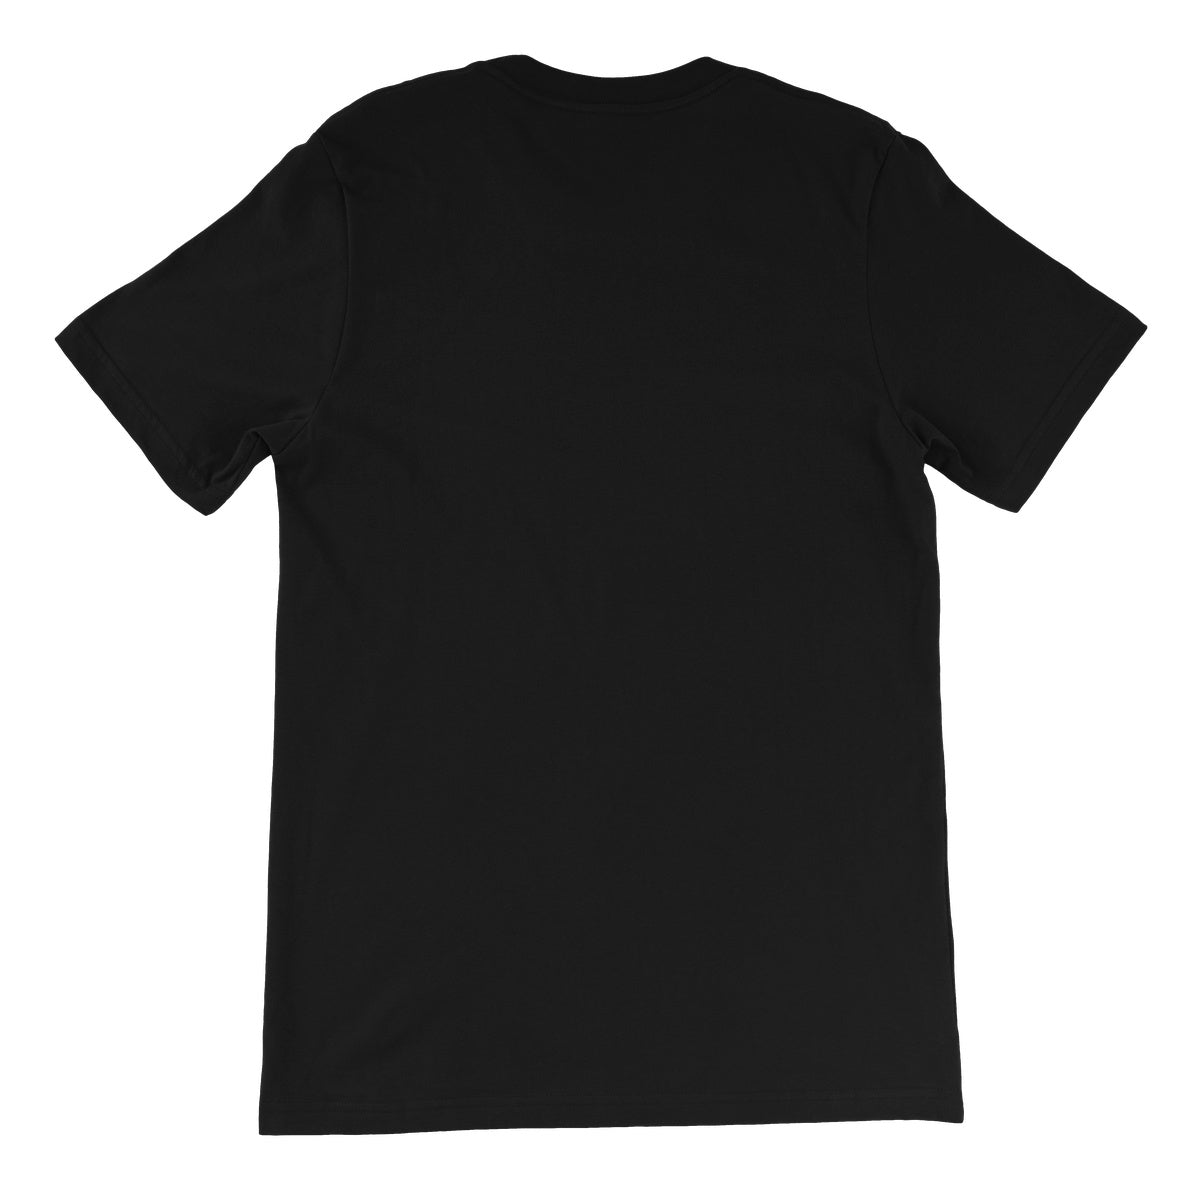 Superstar Pro Wrestling Logo Unisex Short Sleeve T-Shirt